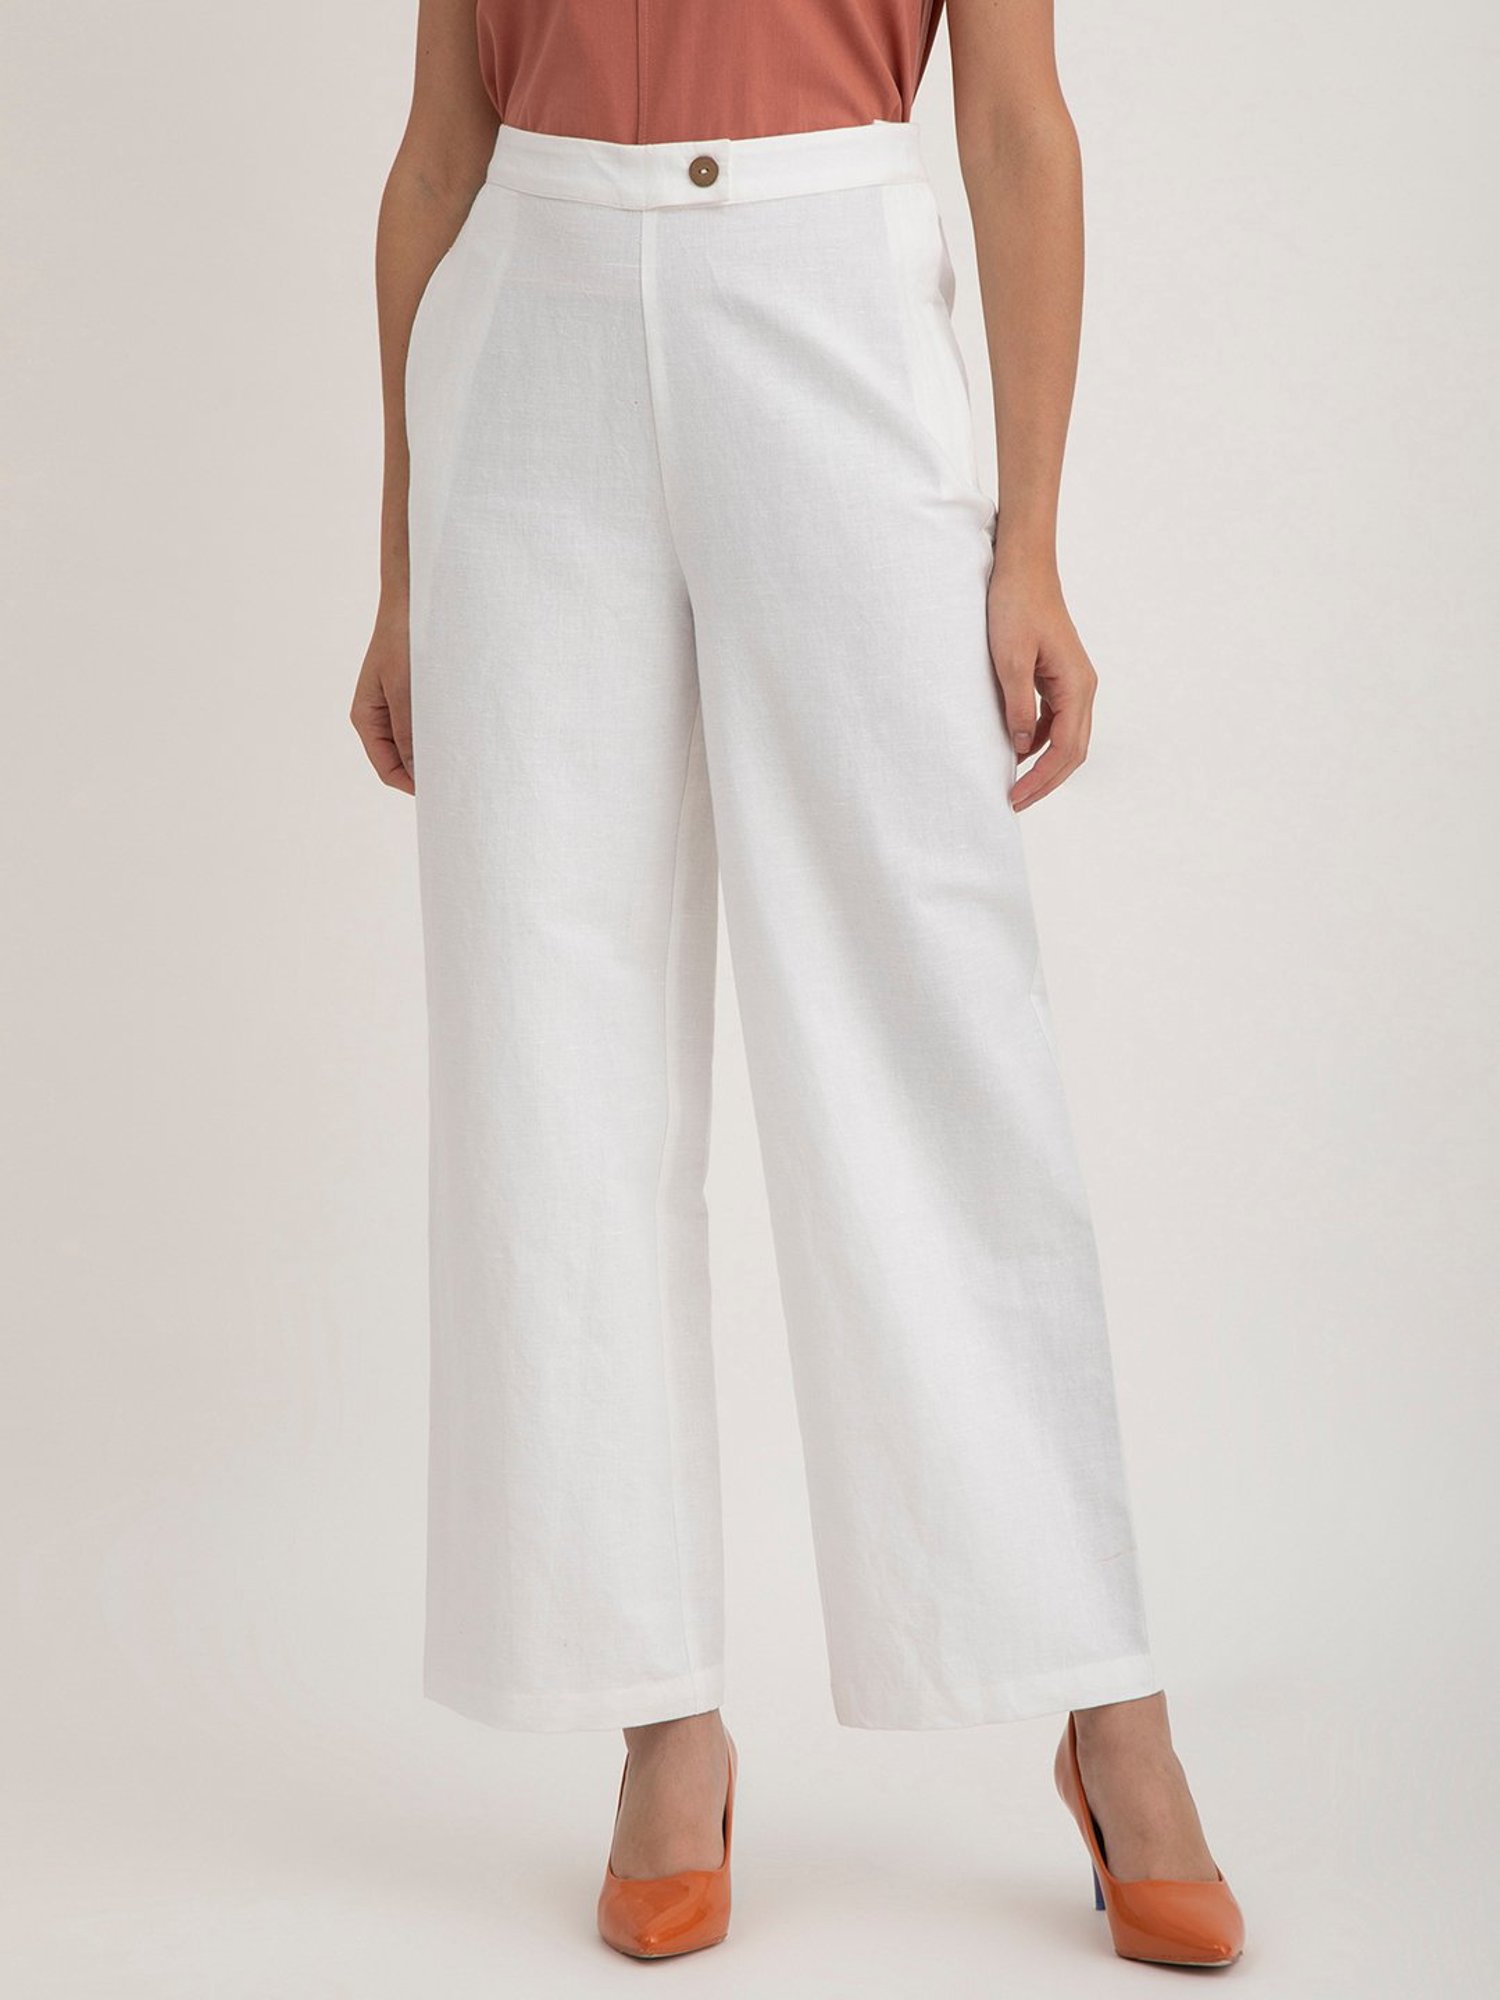 Buy Mehrang Cotton Blend Parallel Trouser Pants Regular fit Bell Bottom  Pants for Women 26 Black at Amazonin